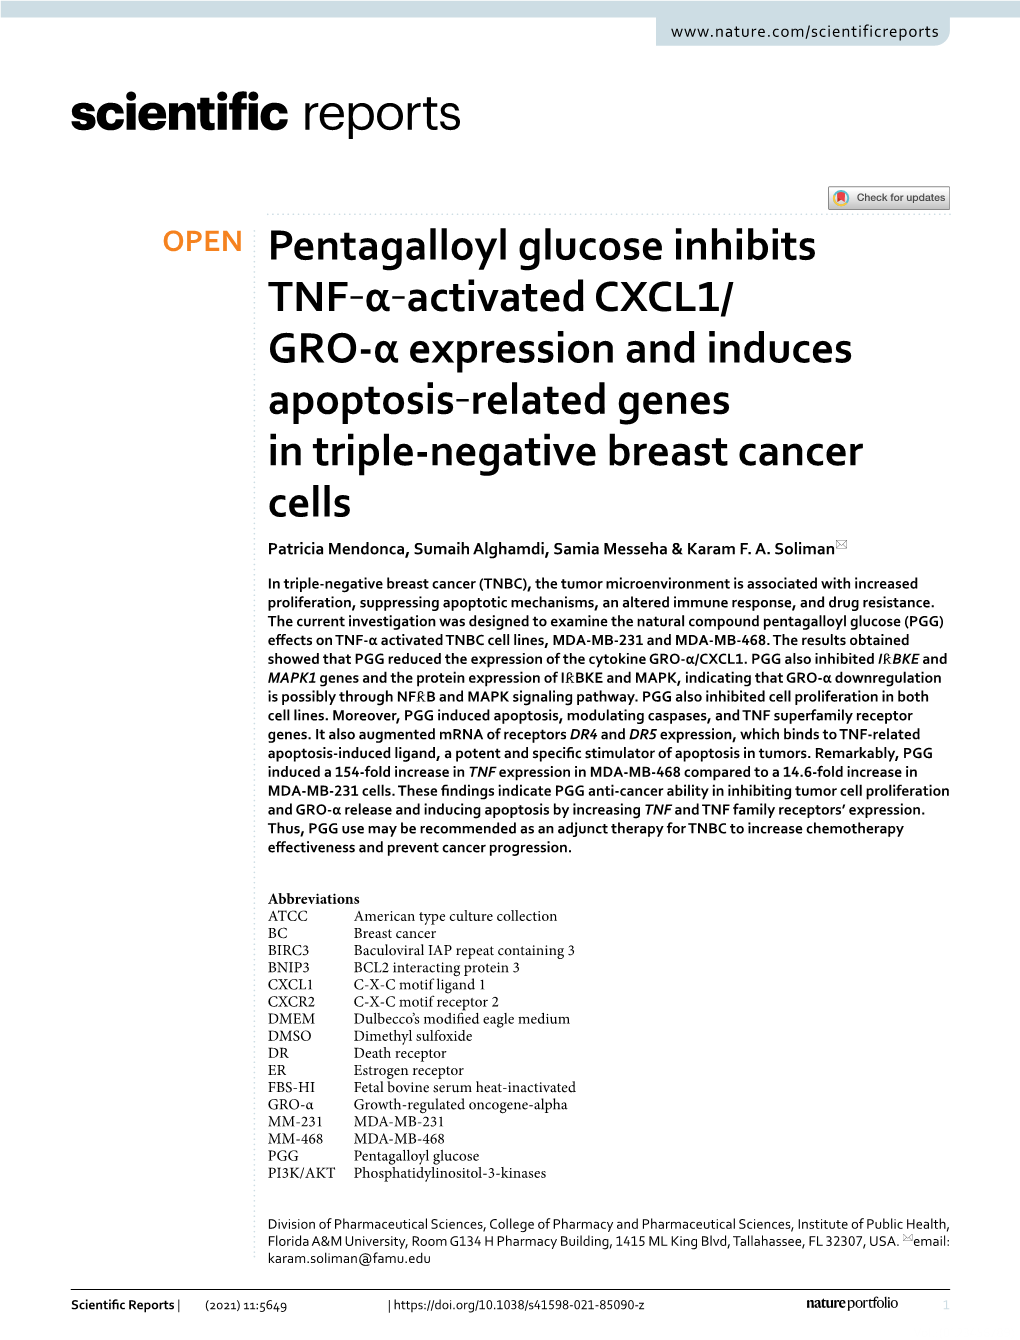 Pentagalloyl Glucose Inhibits TNF‐Α‐Activated CXCL1